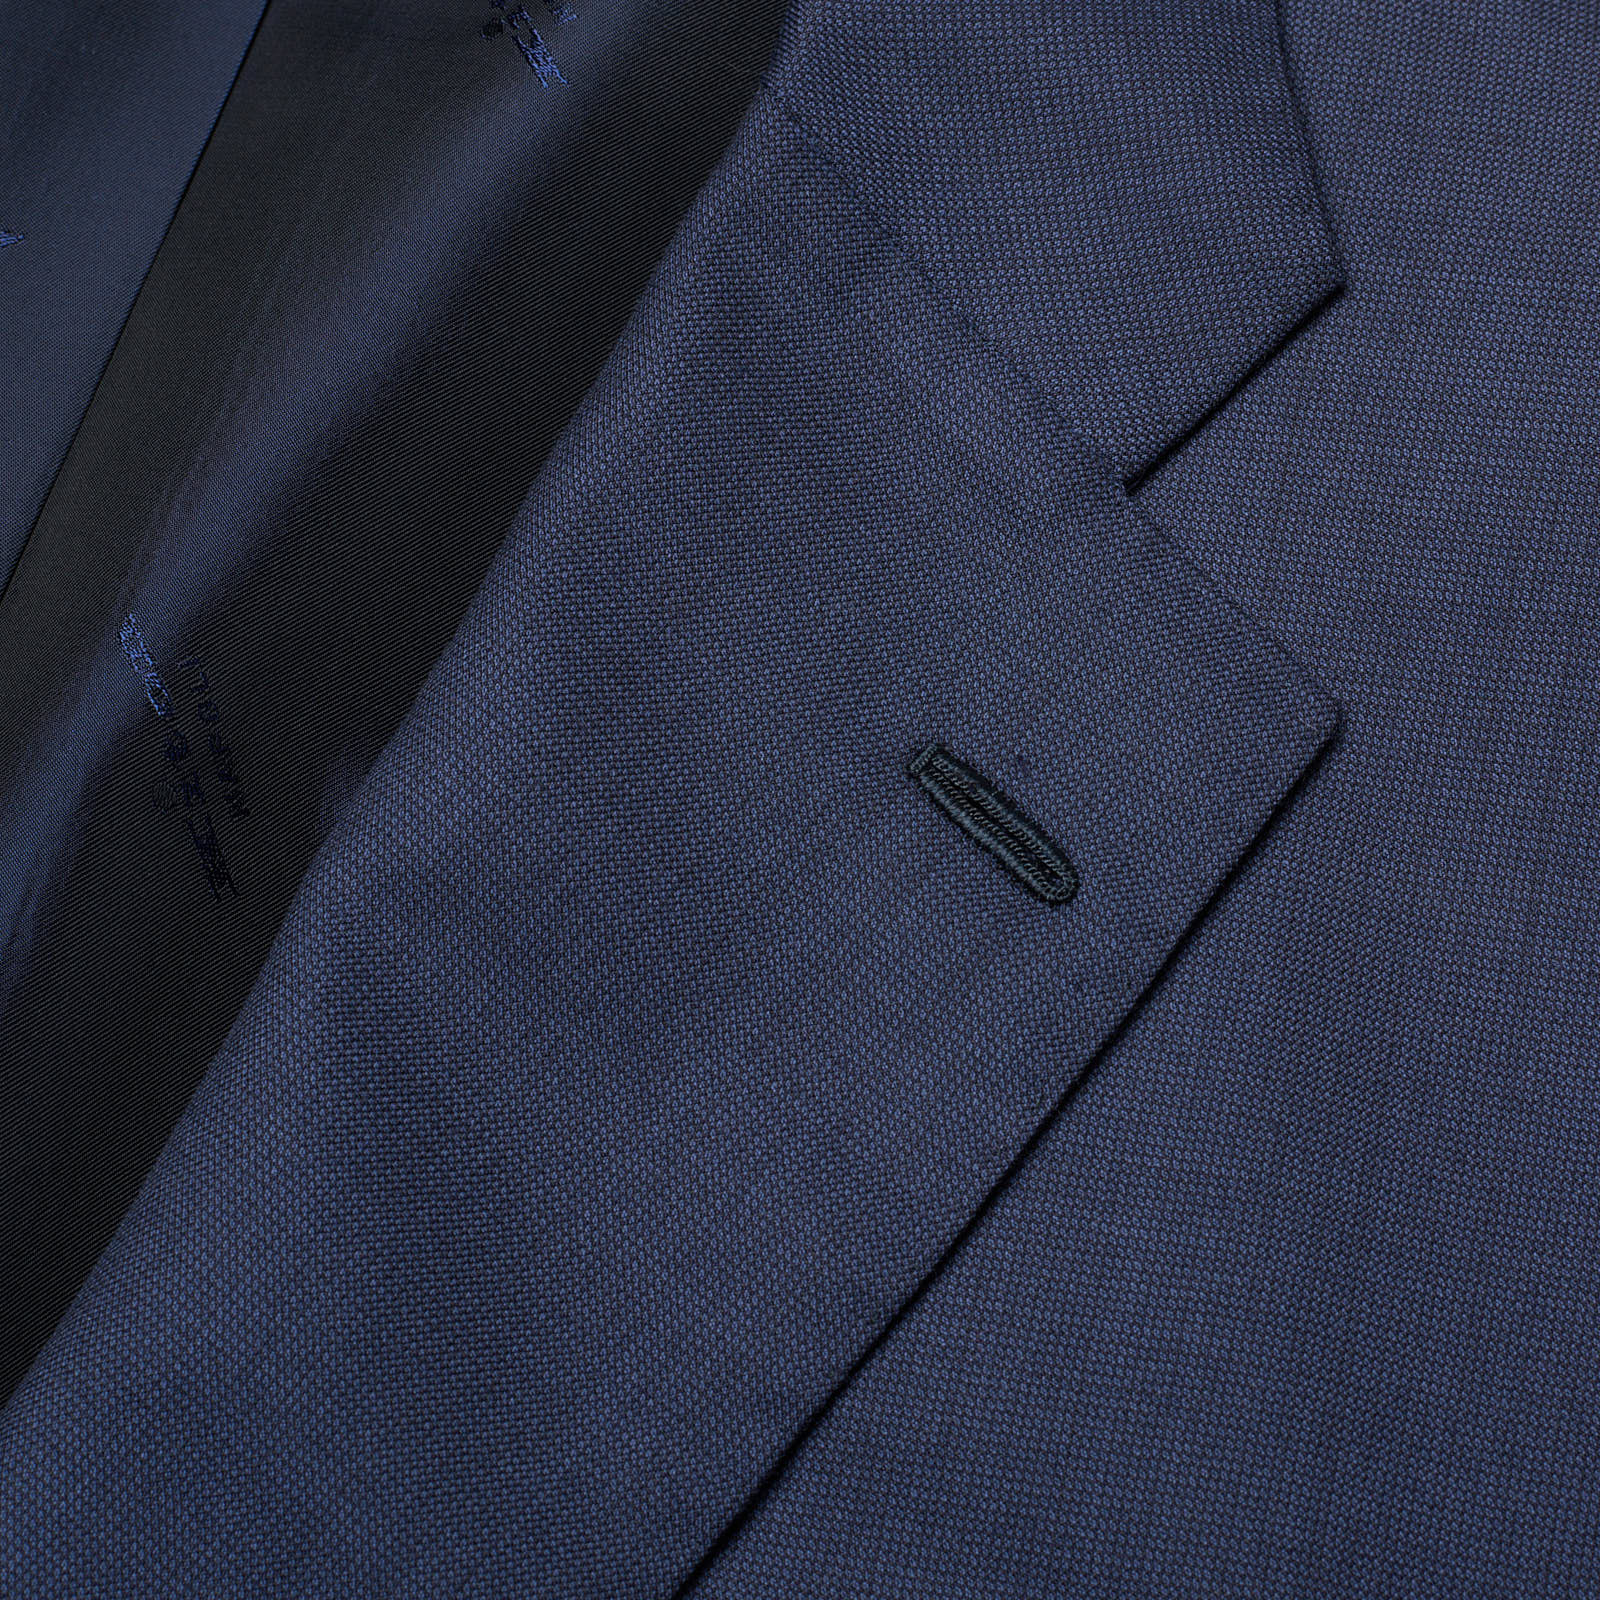 KITON "Diamante Blue" Handmade Blue Super 150's Wool Suit EU 60 NEW US 50